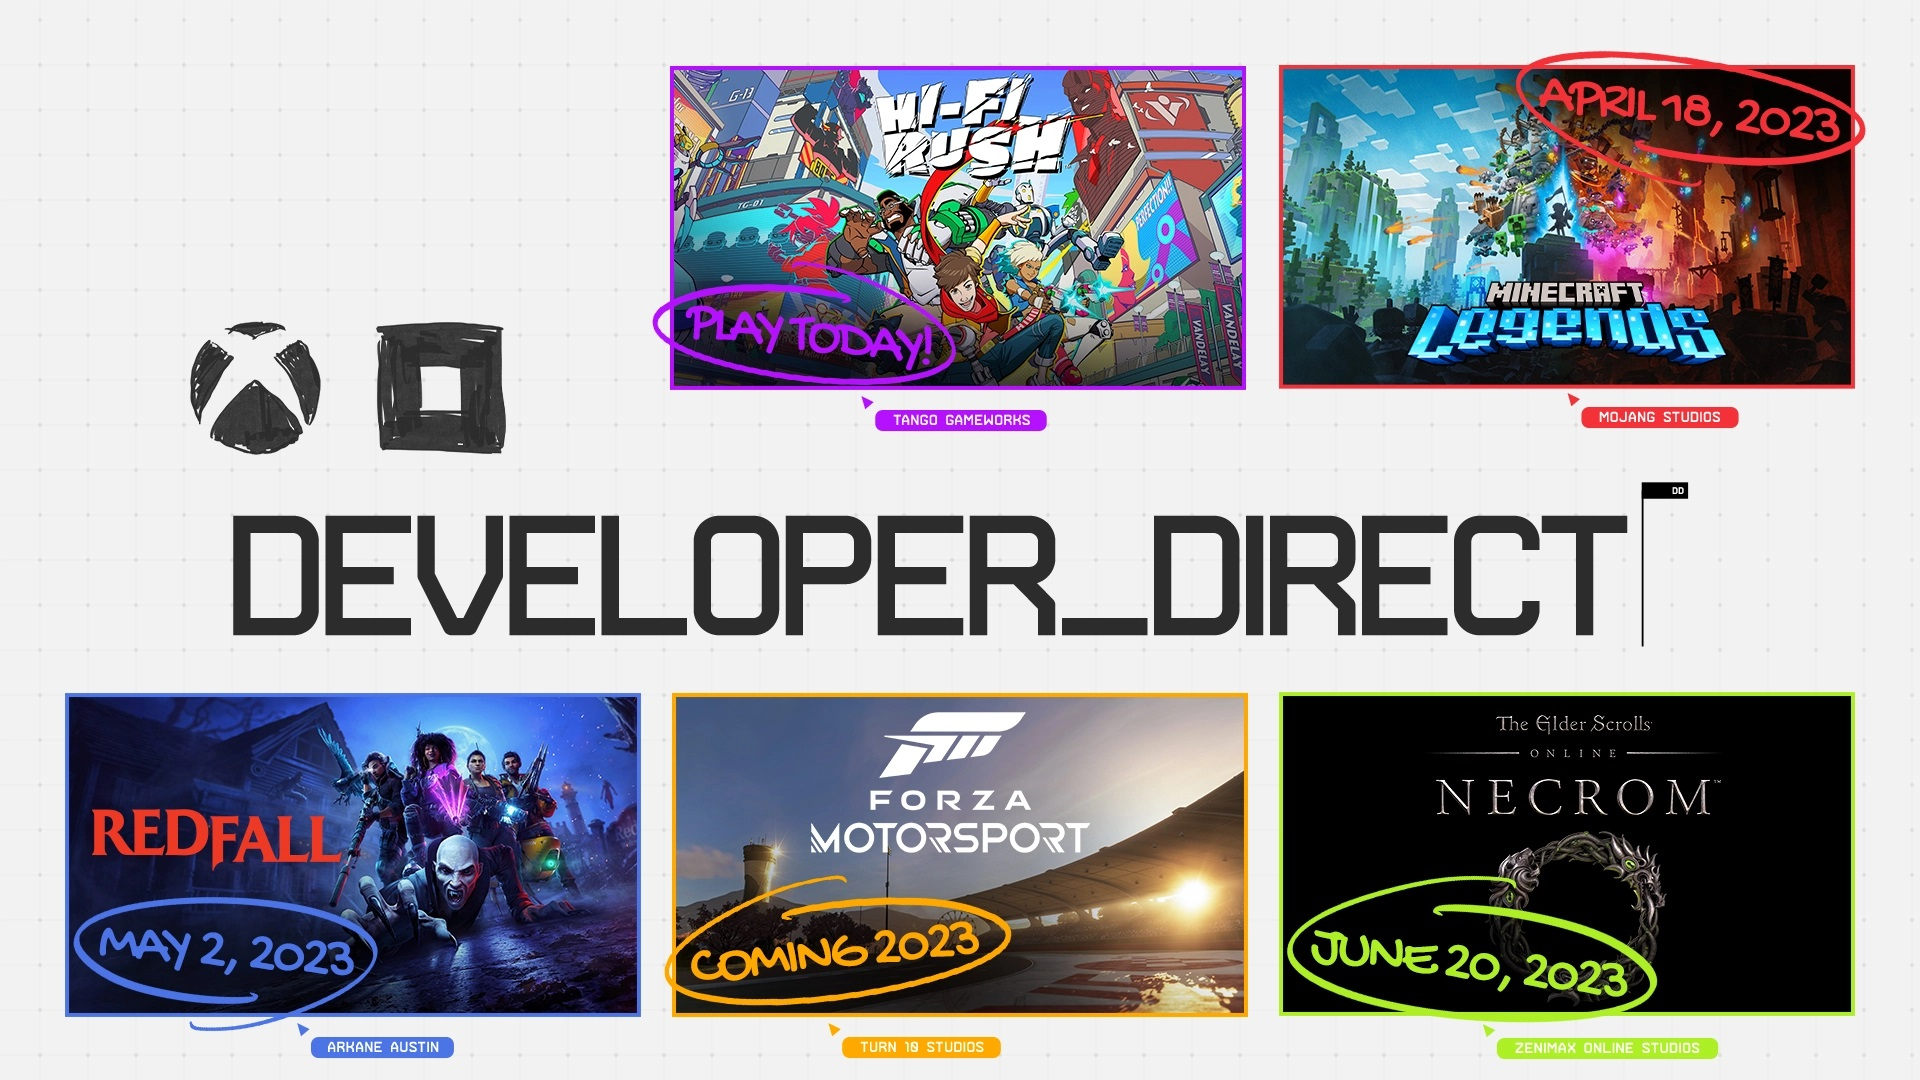   Redfall,     The Evil Within   Forza Motorsport:       Developer_Direct  Xbox  Bethesda